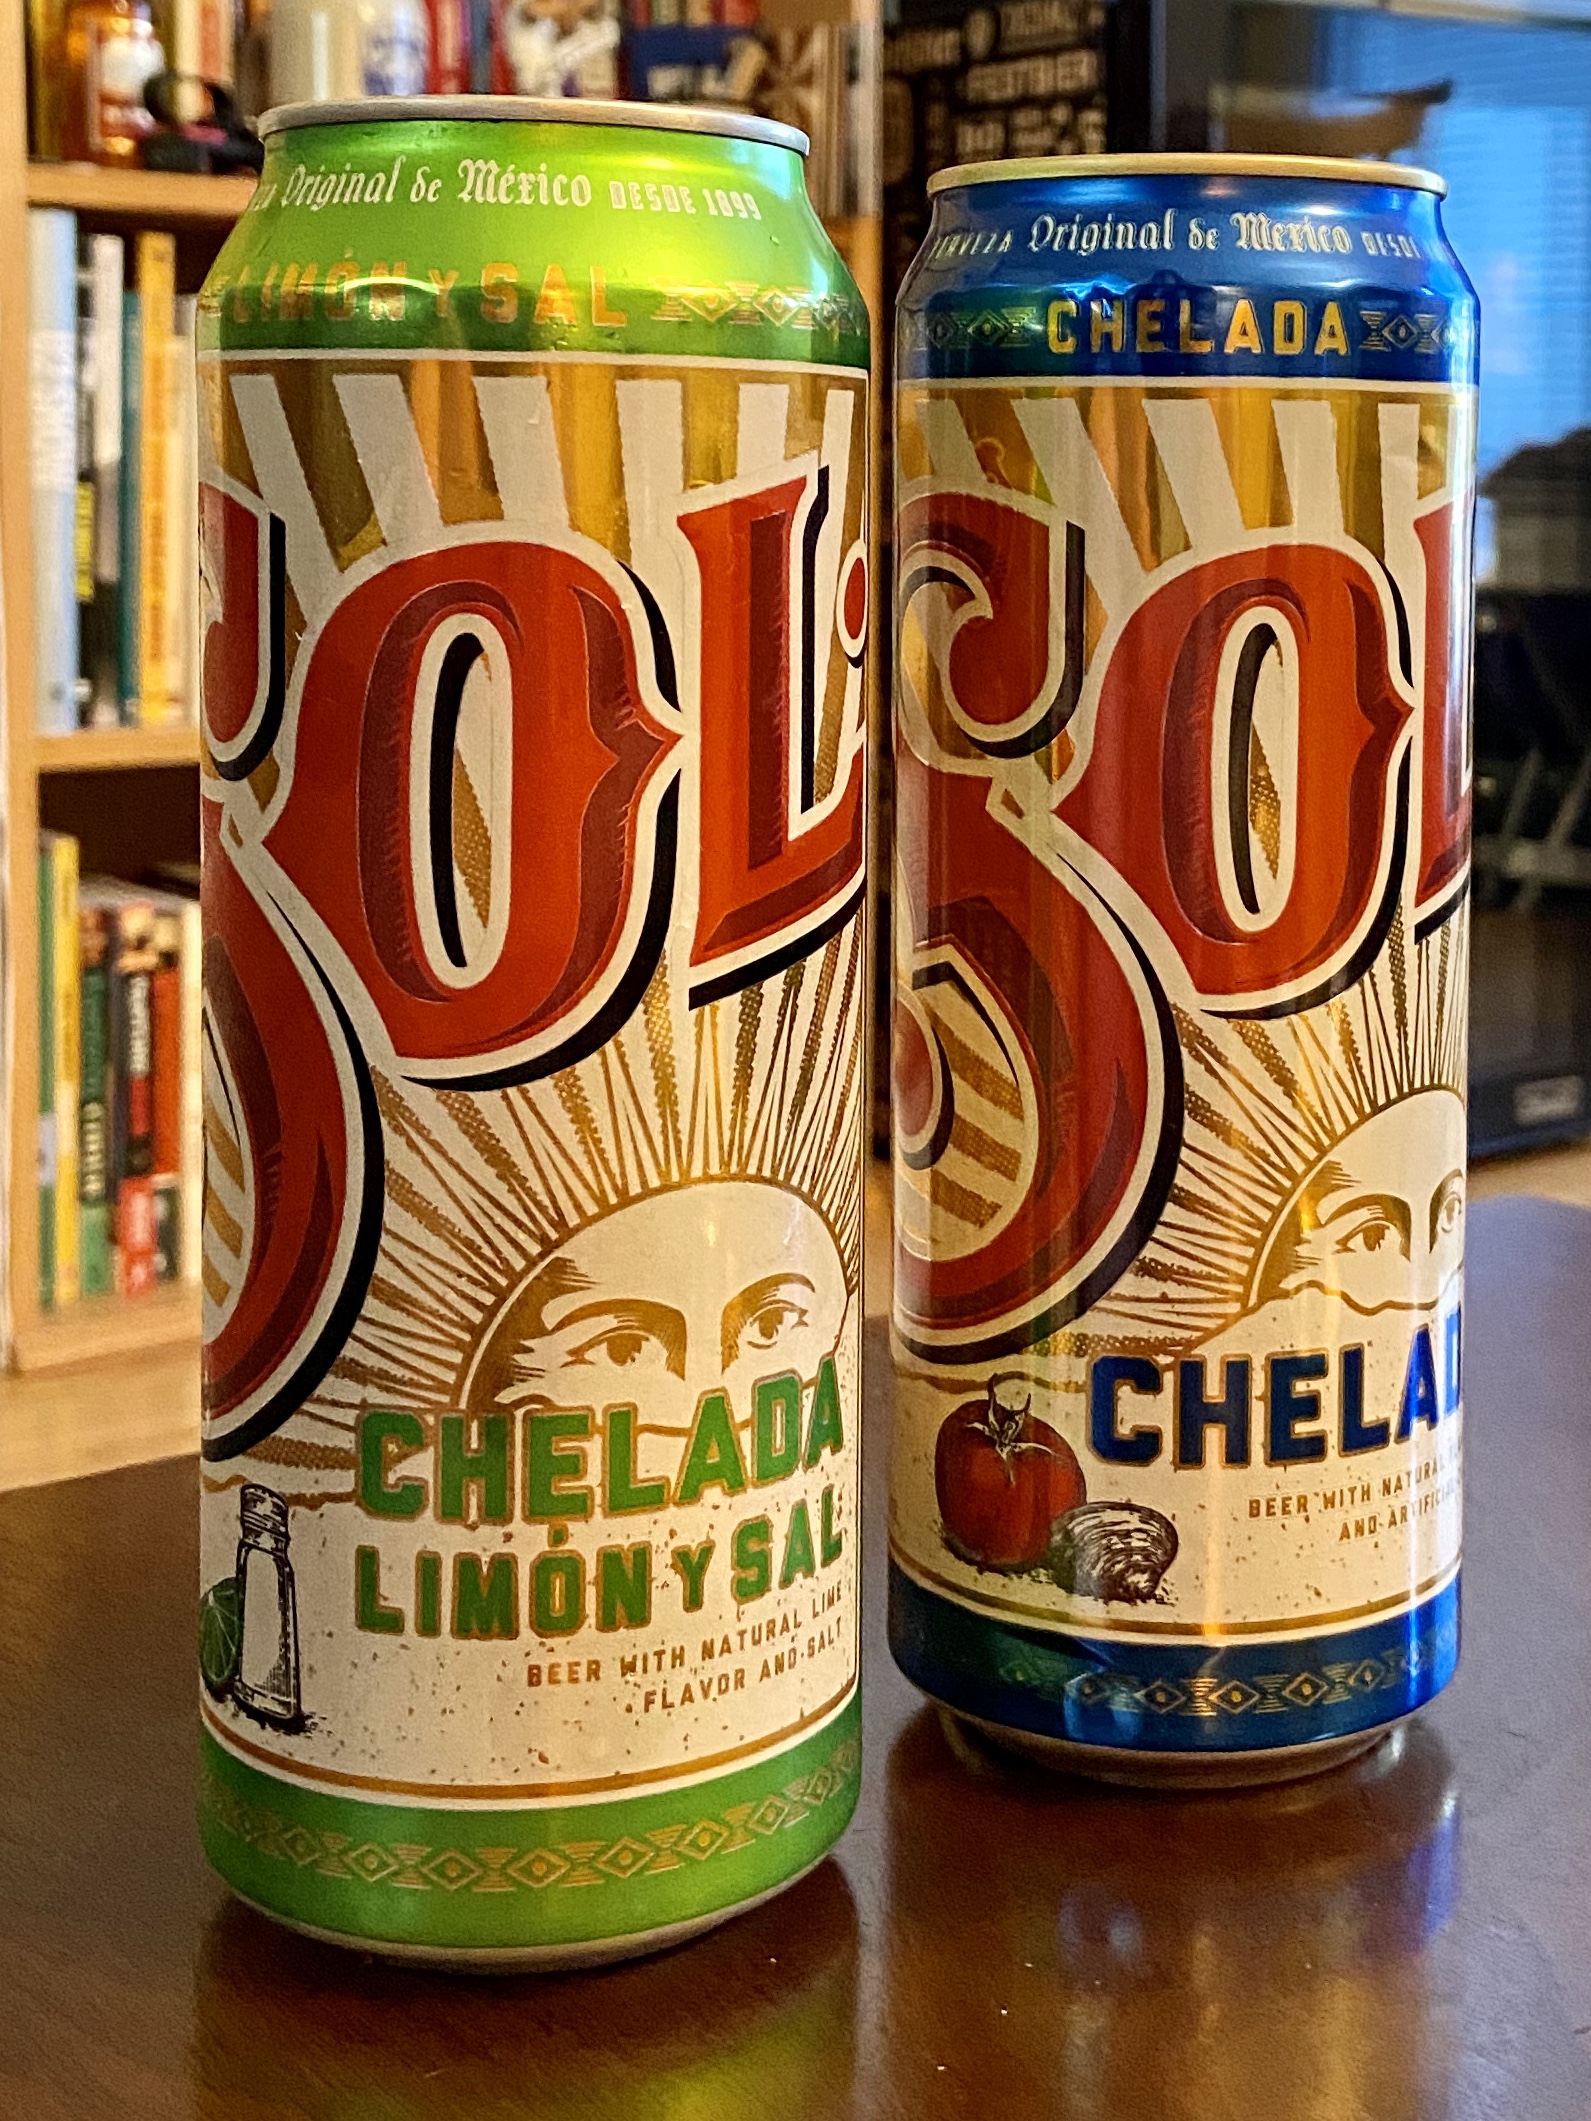 Sol Chelada Limón y Sal and Sol Chelada packaged in 24oz cans.